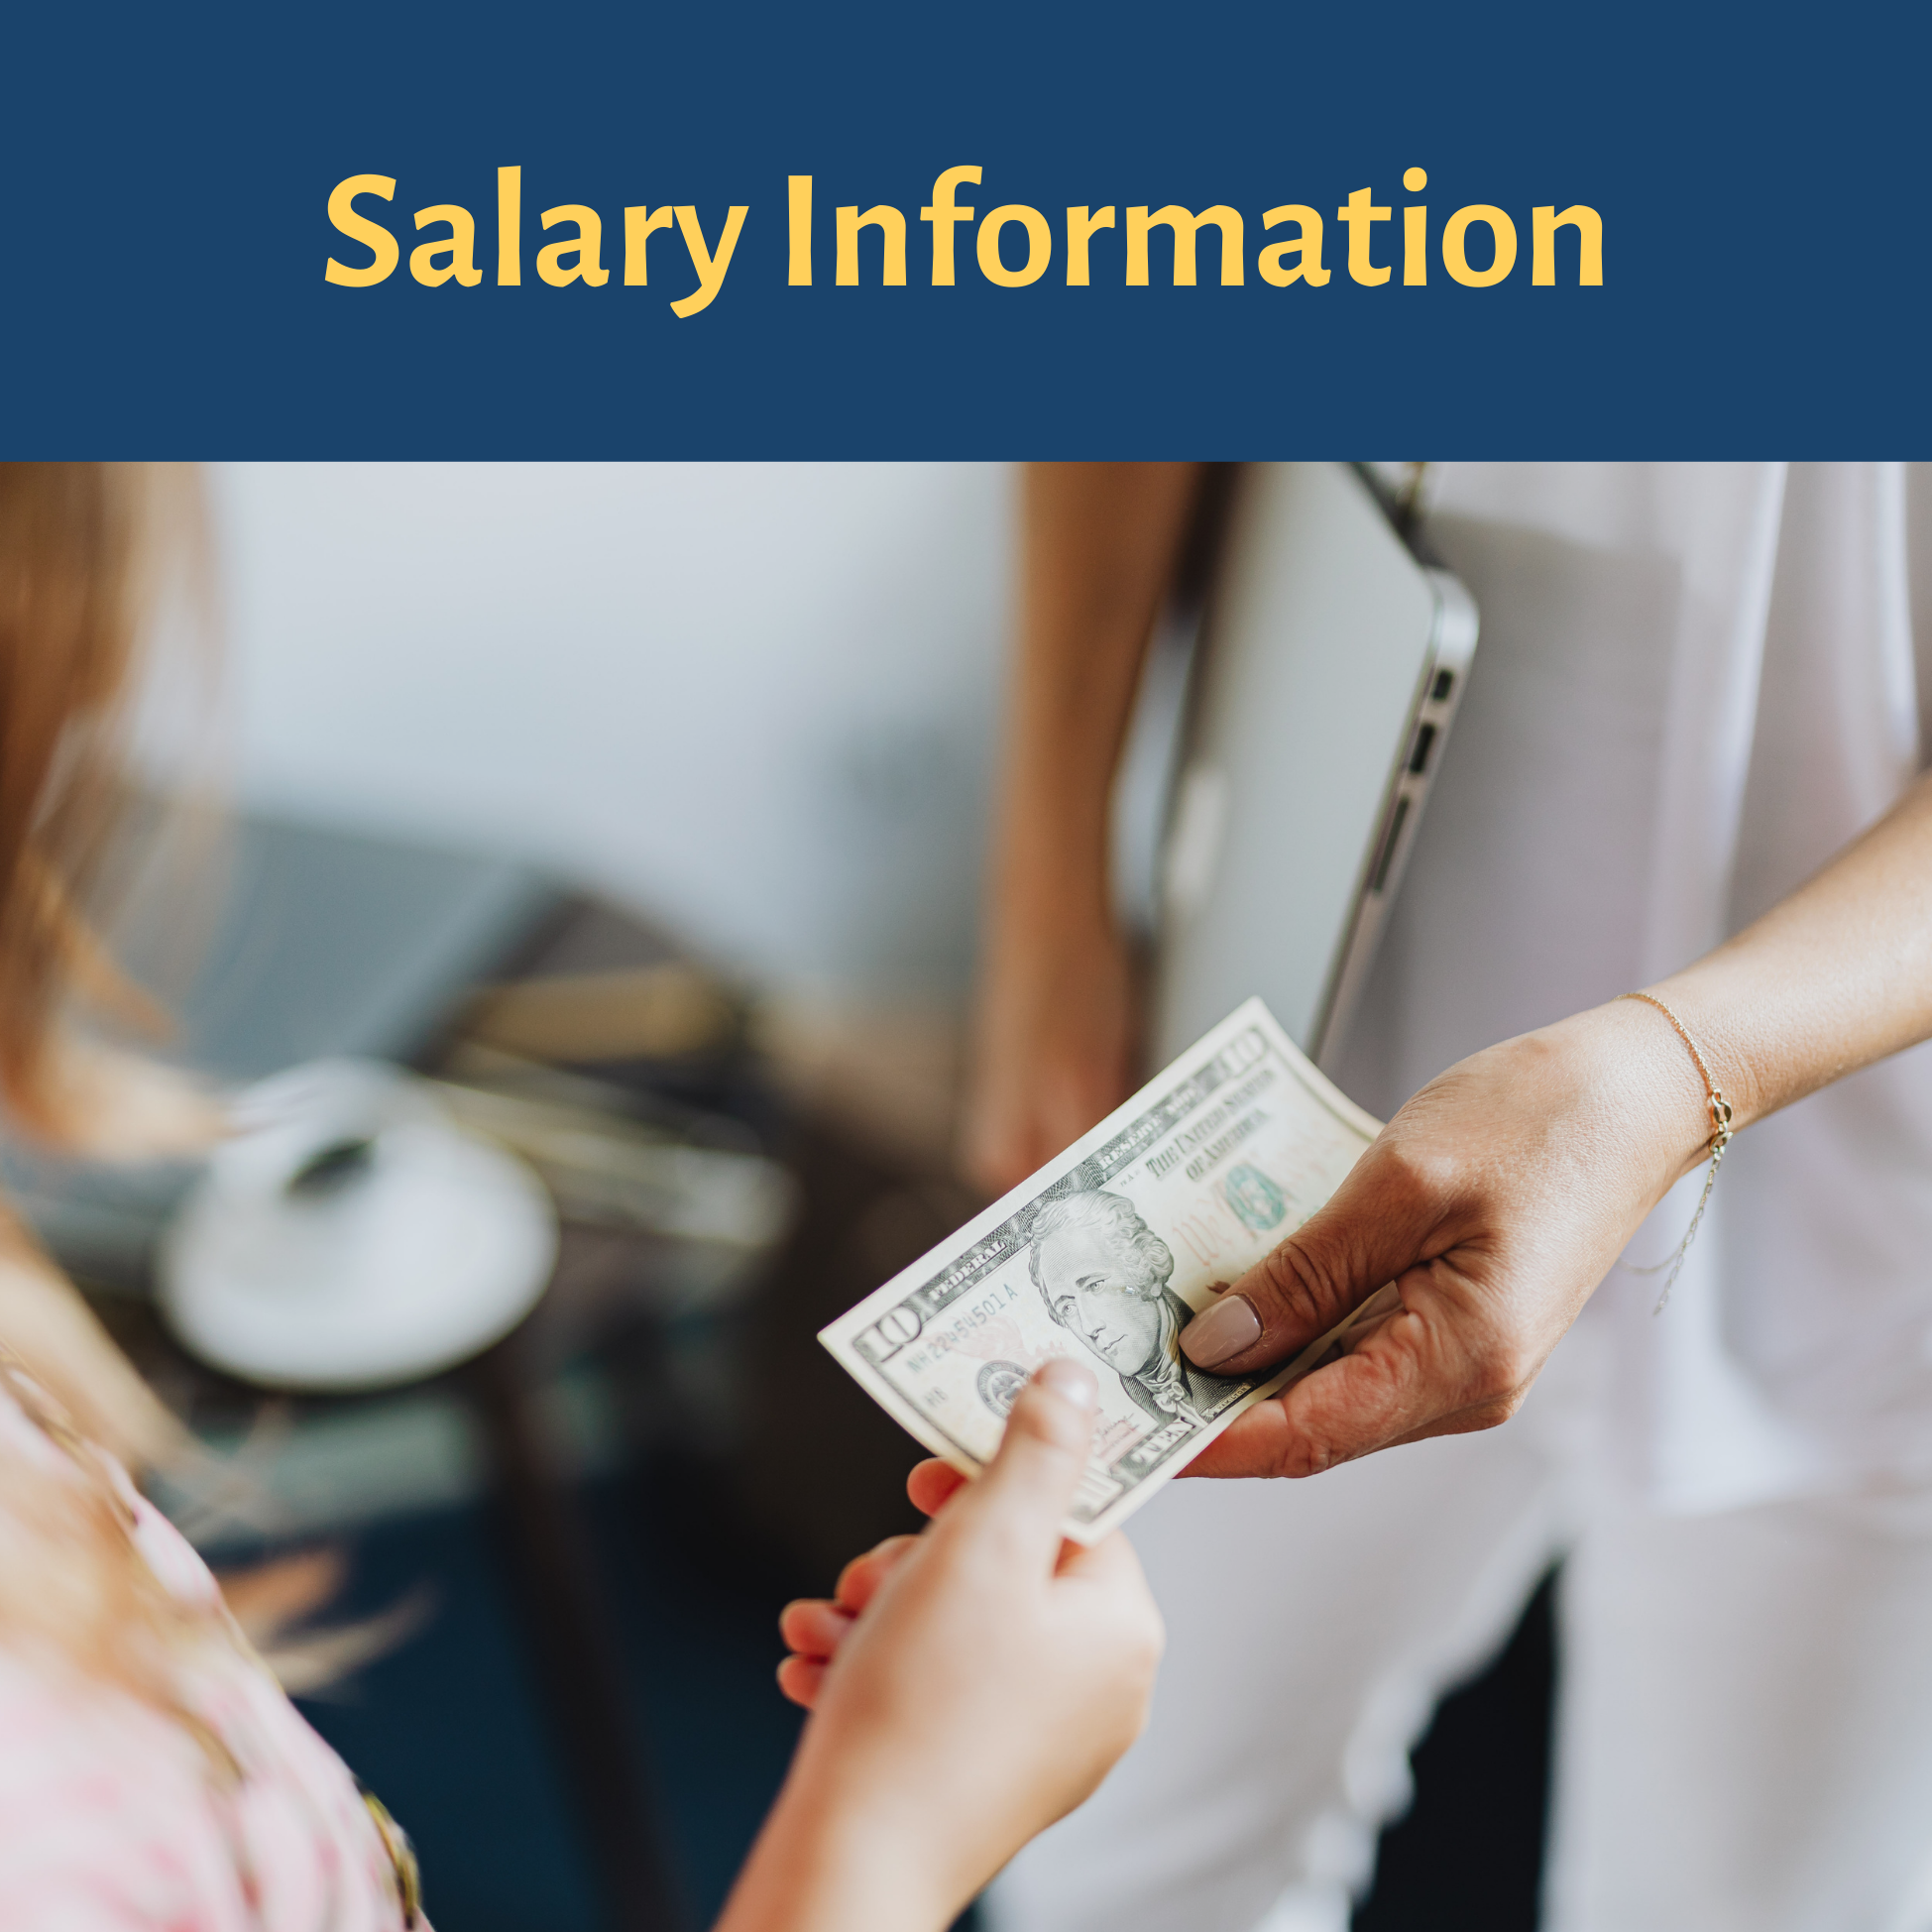 Salary Information